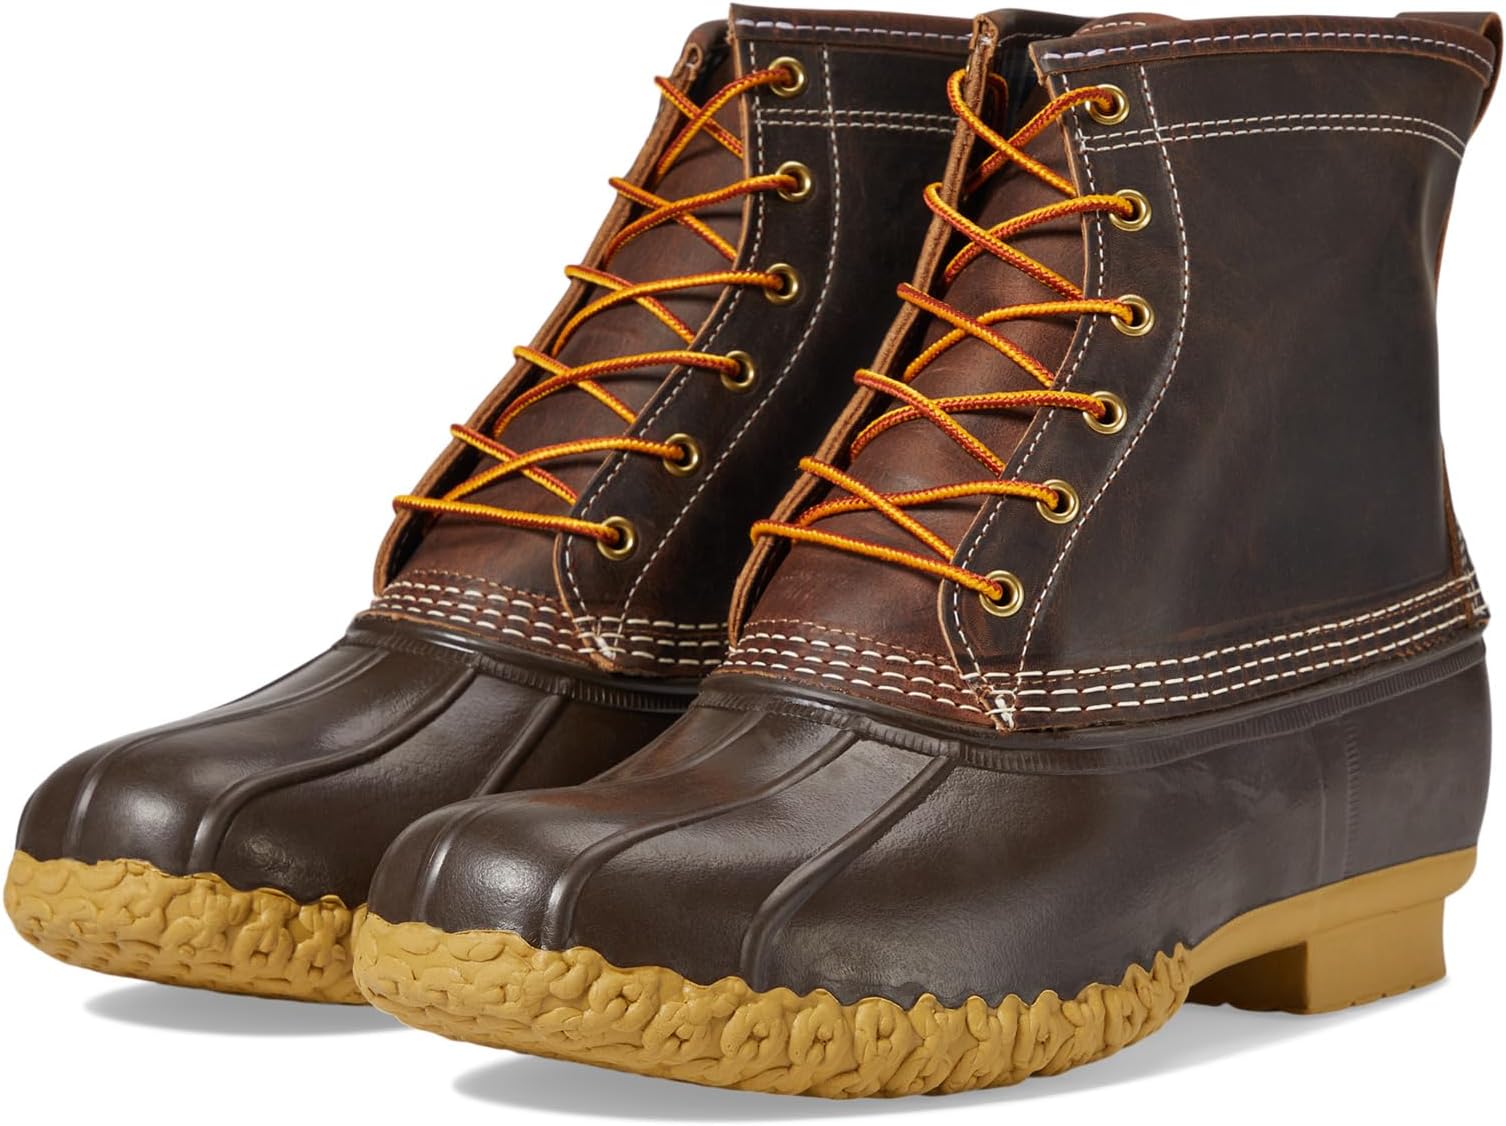 повседневные ботинки l l bean 10 new bean boot цвет brown brown Зимние ботинки Bean Boot 8 Leather Primaloft Flannel Lined L.L.Bean, цвет Classic Brown/Bean Boot Brown/Gum/Iron